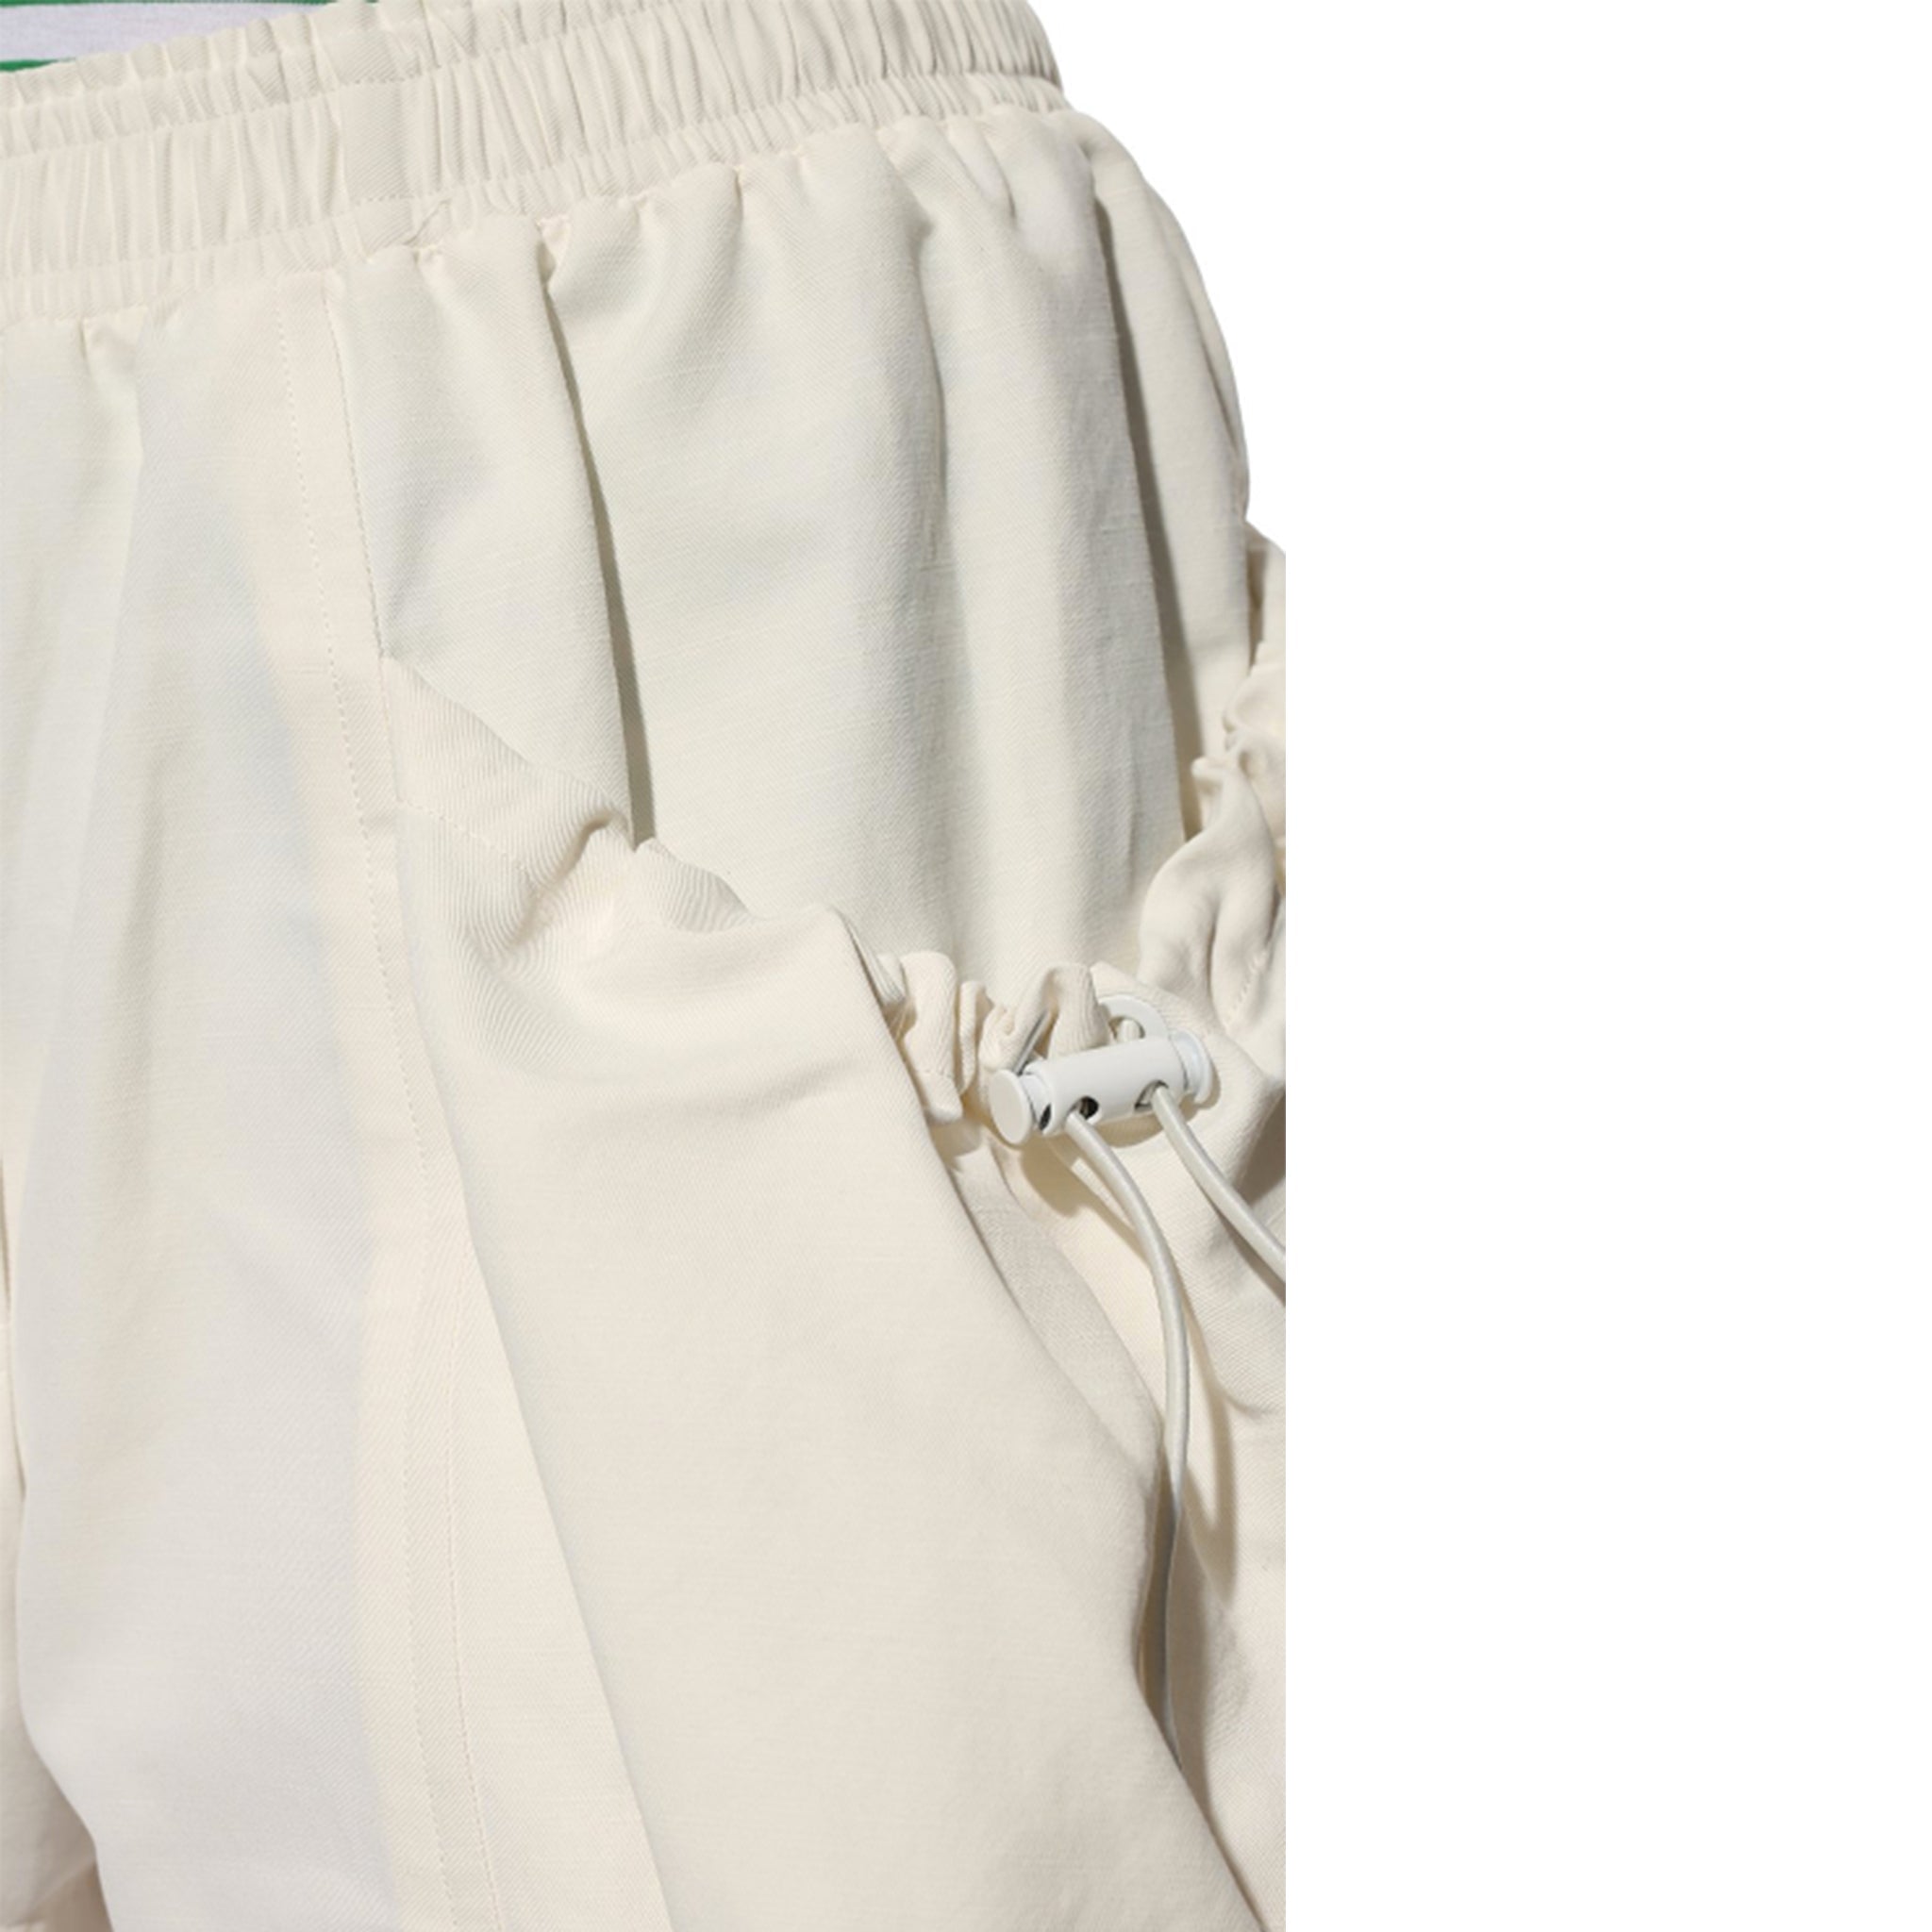 STELLA-MCCARTNEY-OUTLET-SALE-Stella-Mccartney-Cotton-And-Linen-Shorts-Hosen-ARCHIVE-COLLECTION-4.jpg